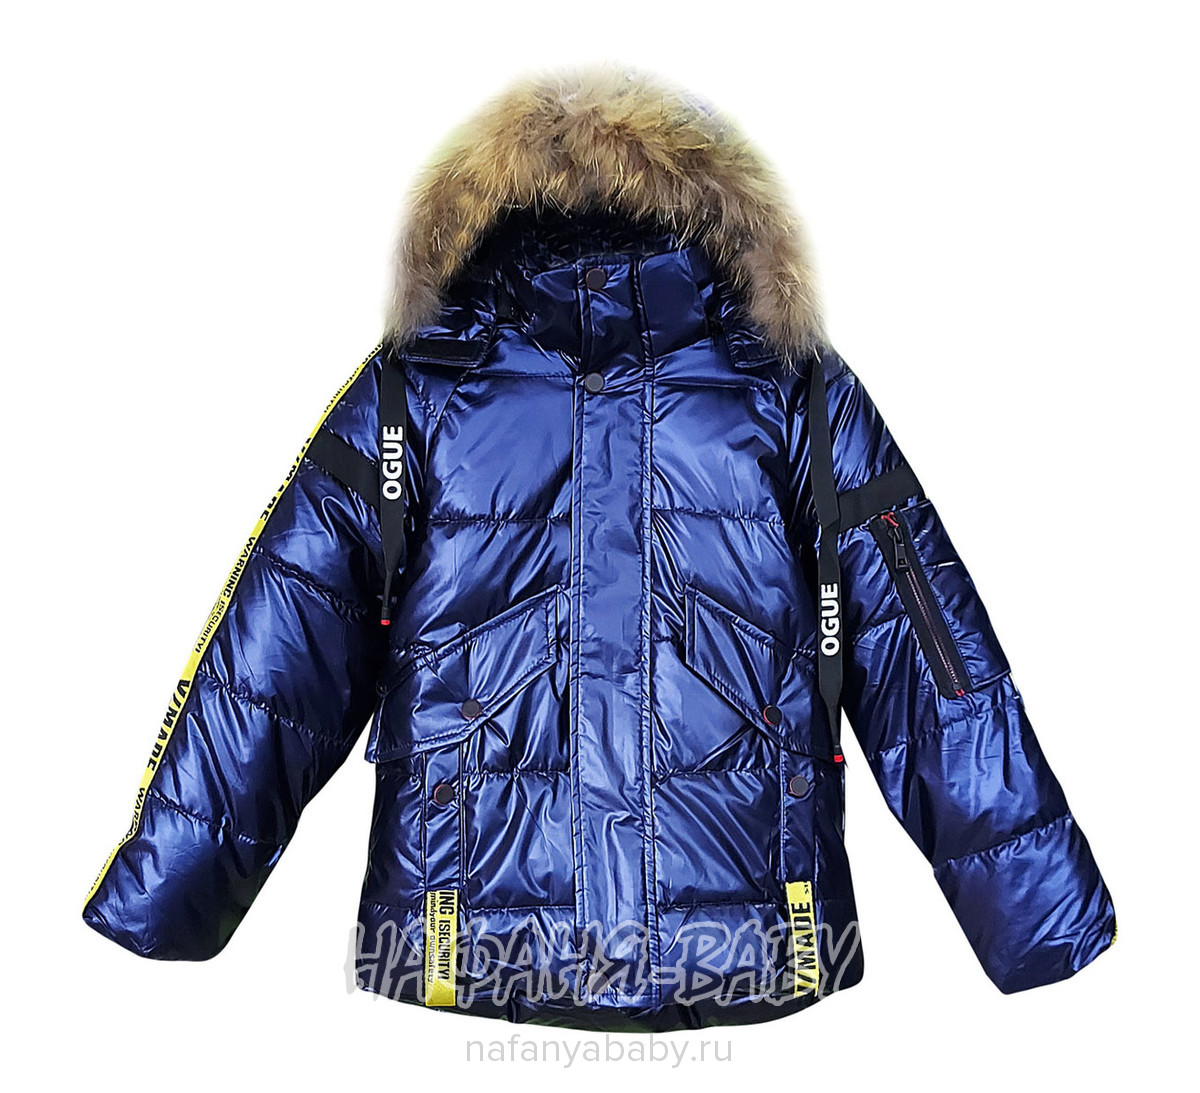 Зимняя куртка XIN LI арт: 1213, 10-15 лет, 5-9 лет, оптом Китай (Пекин)